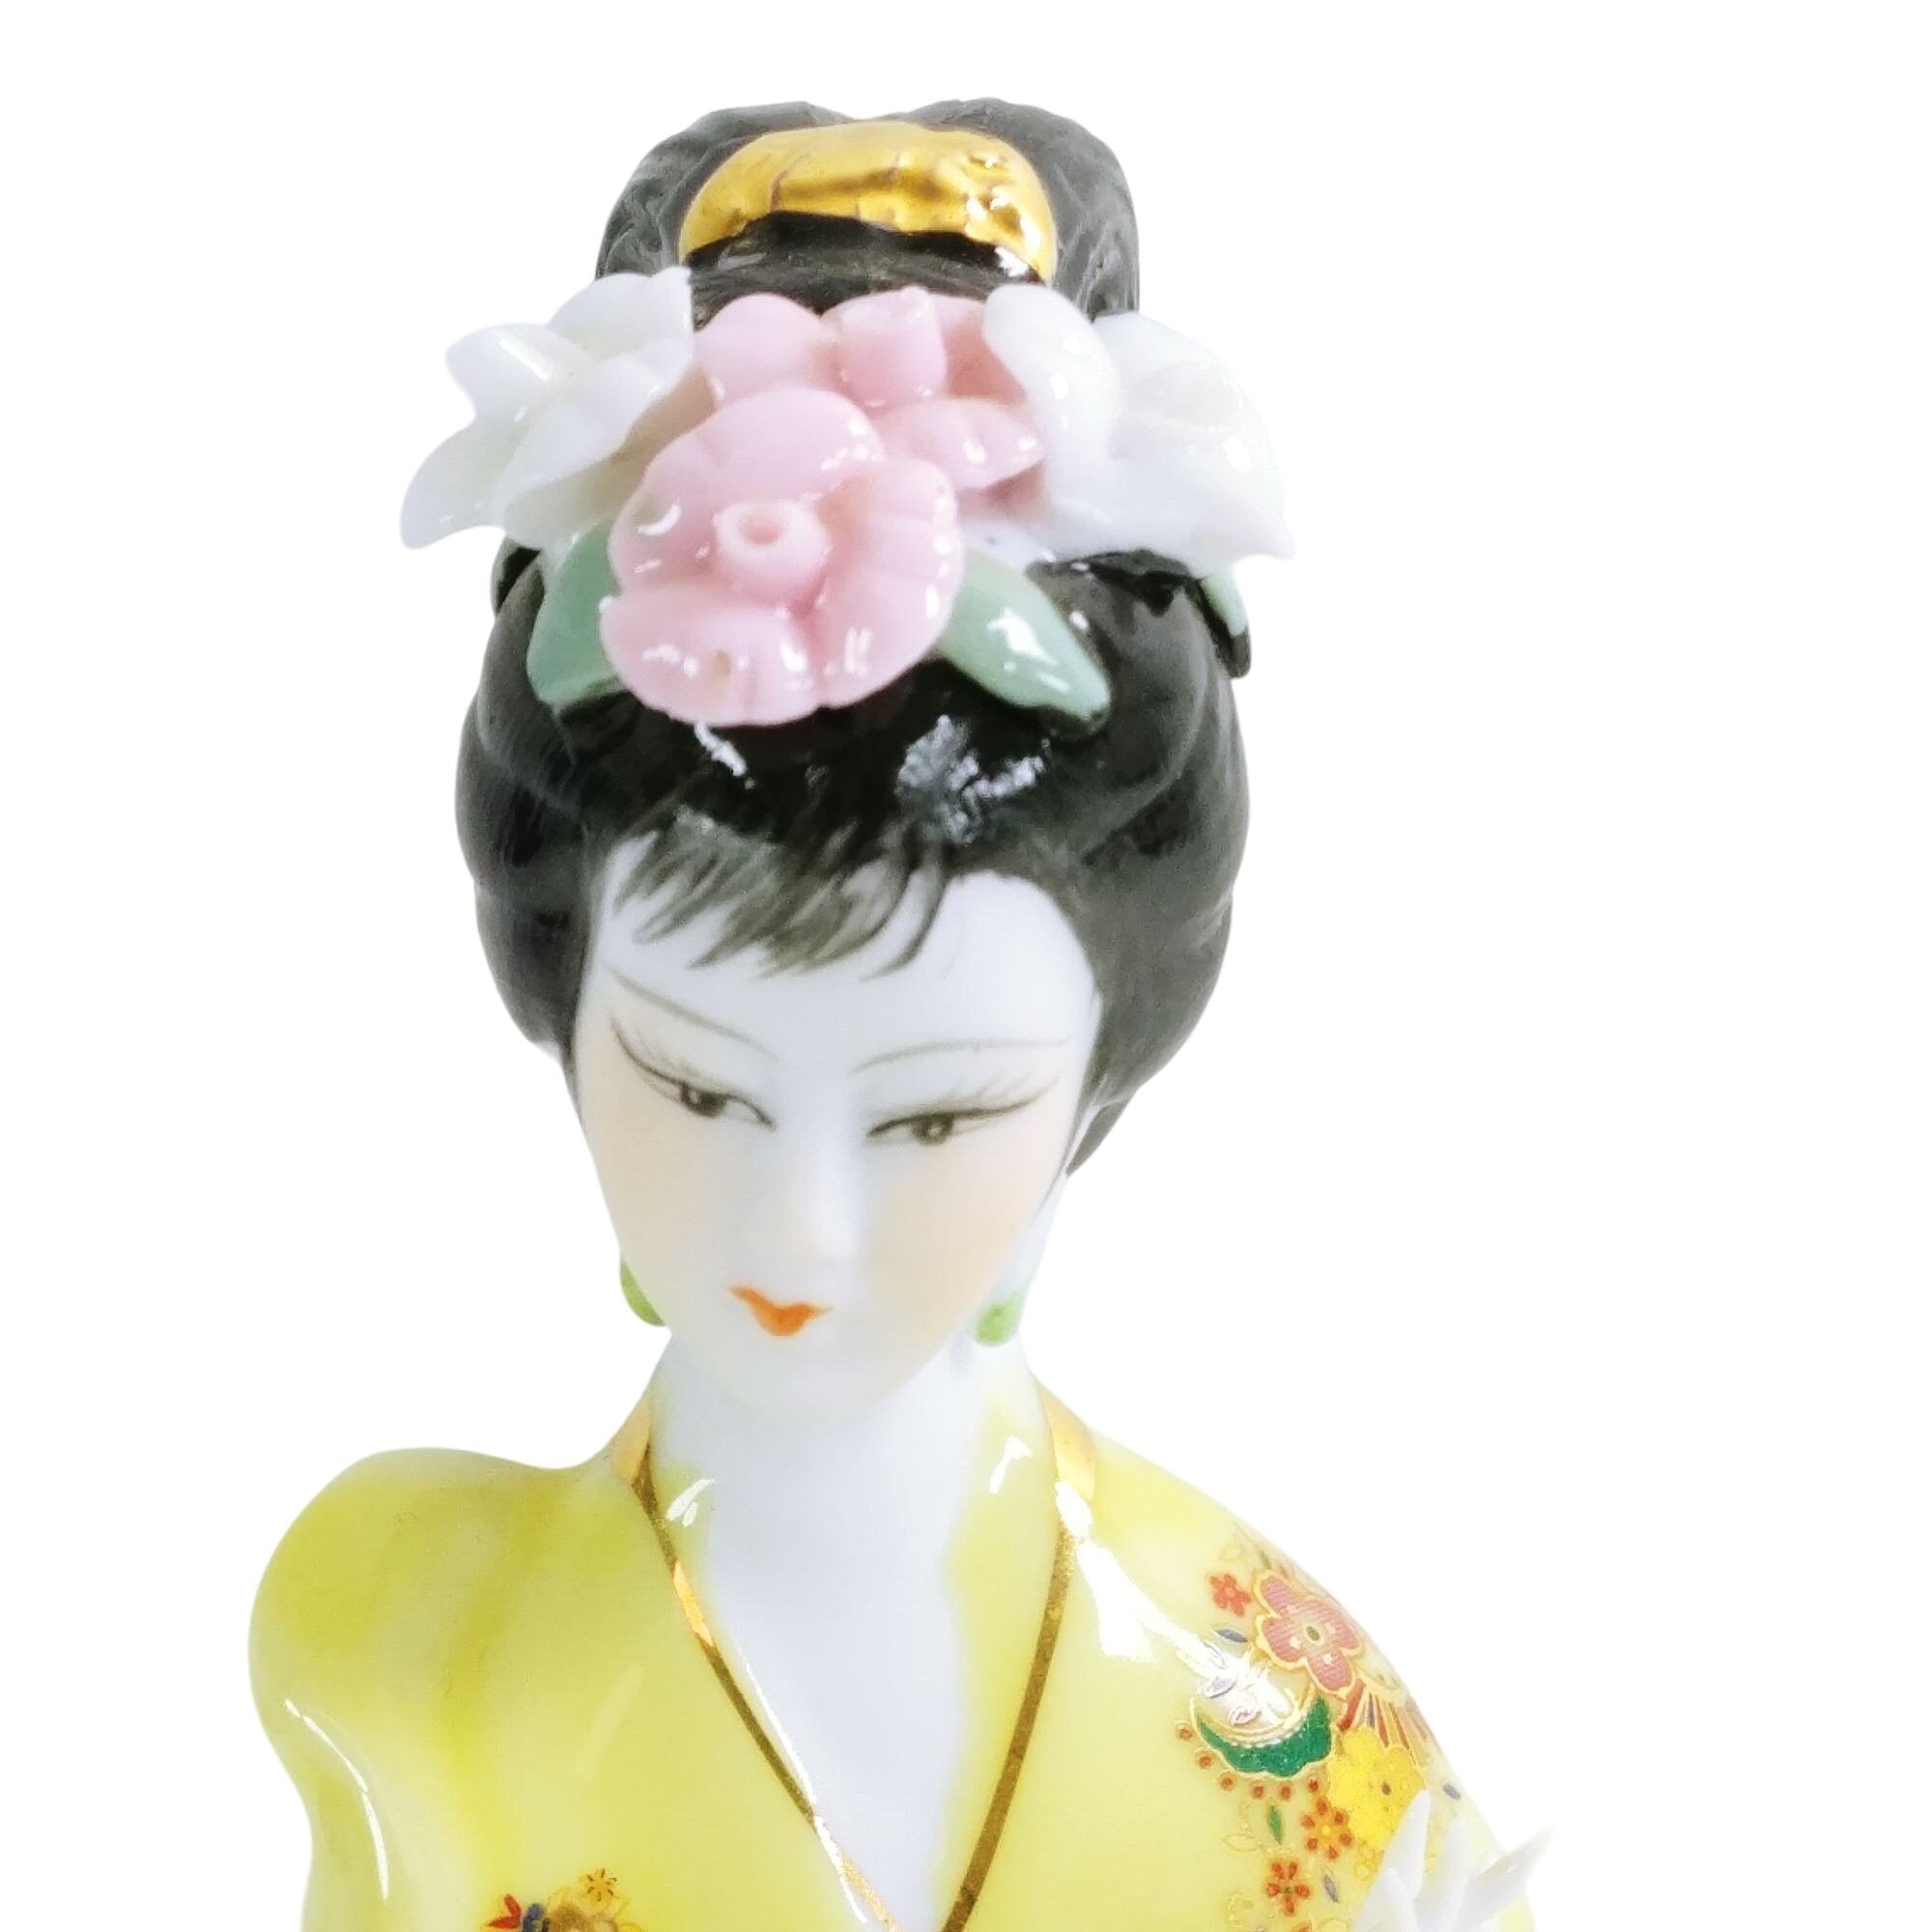 Figurine Asian Geisha Girl Bisque Face Hand Painted Ceramic 9.5"